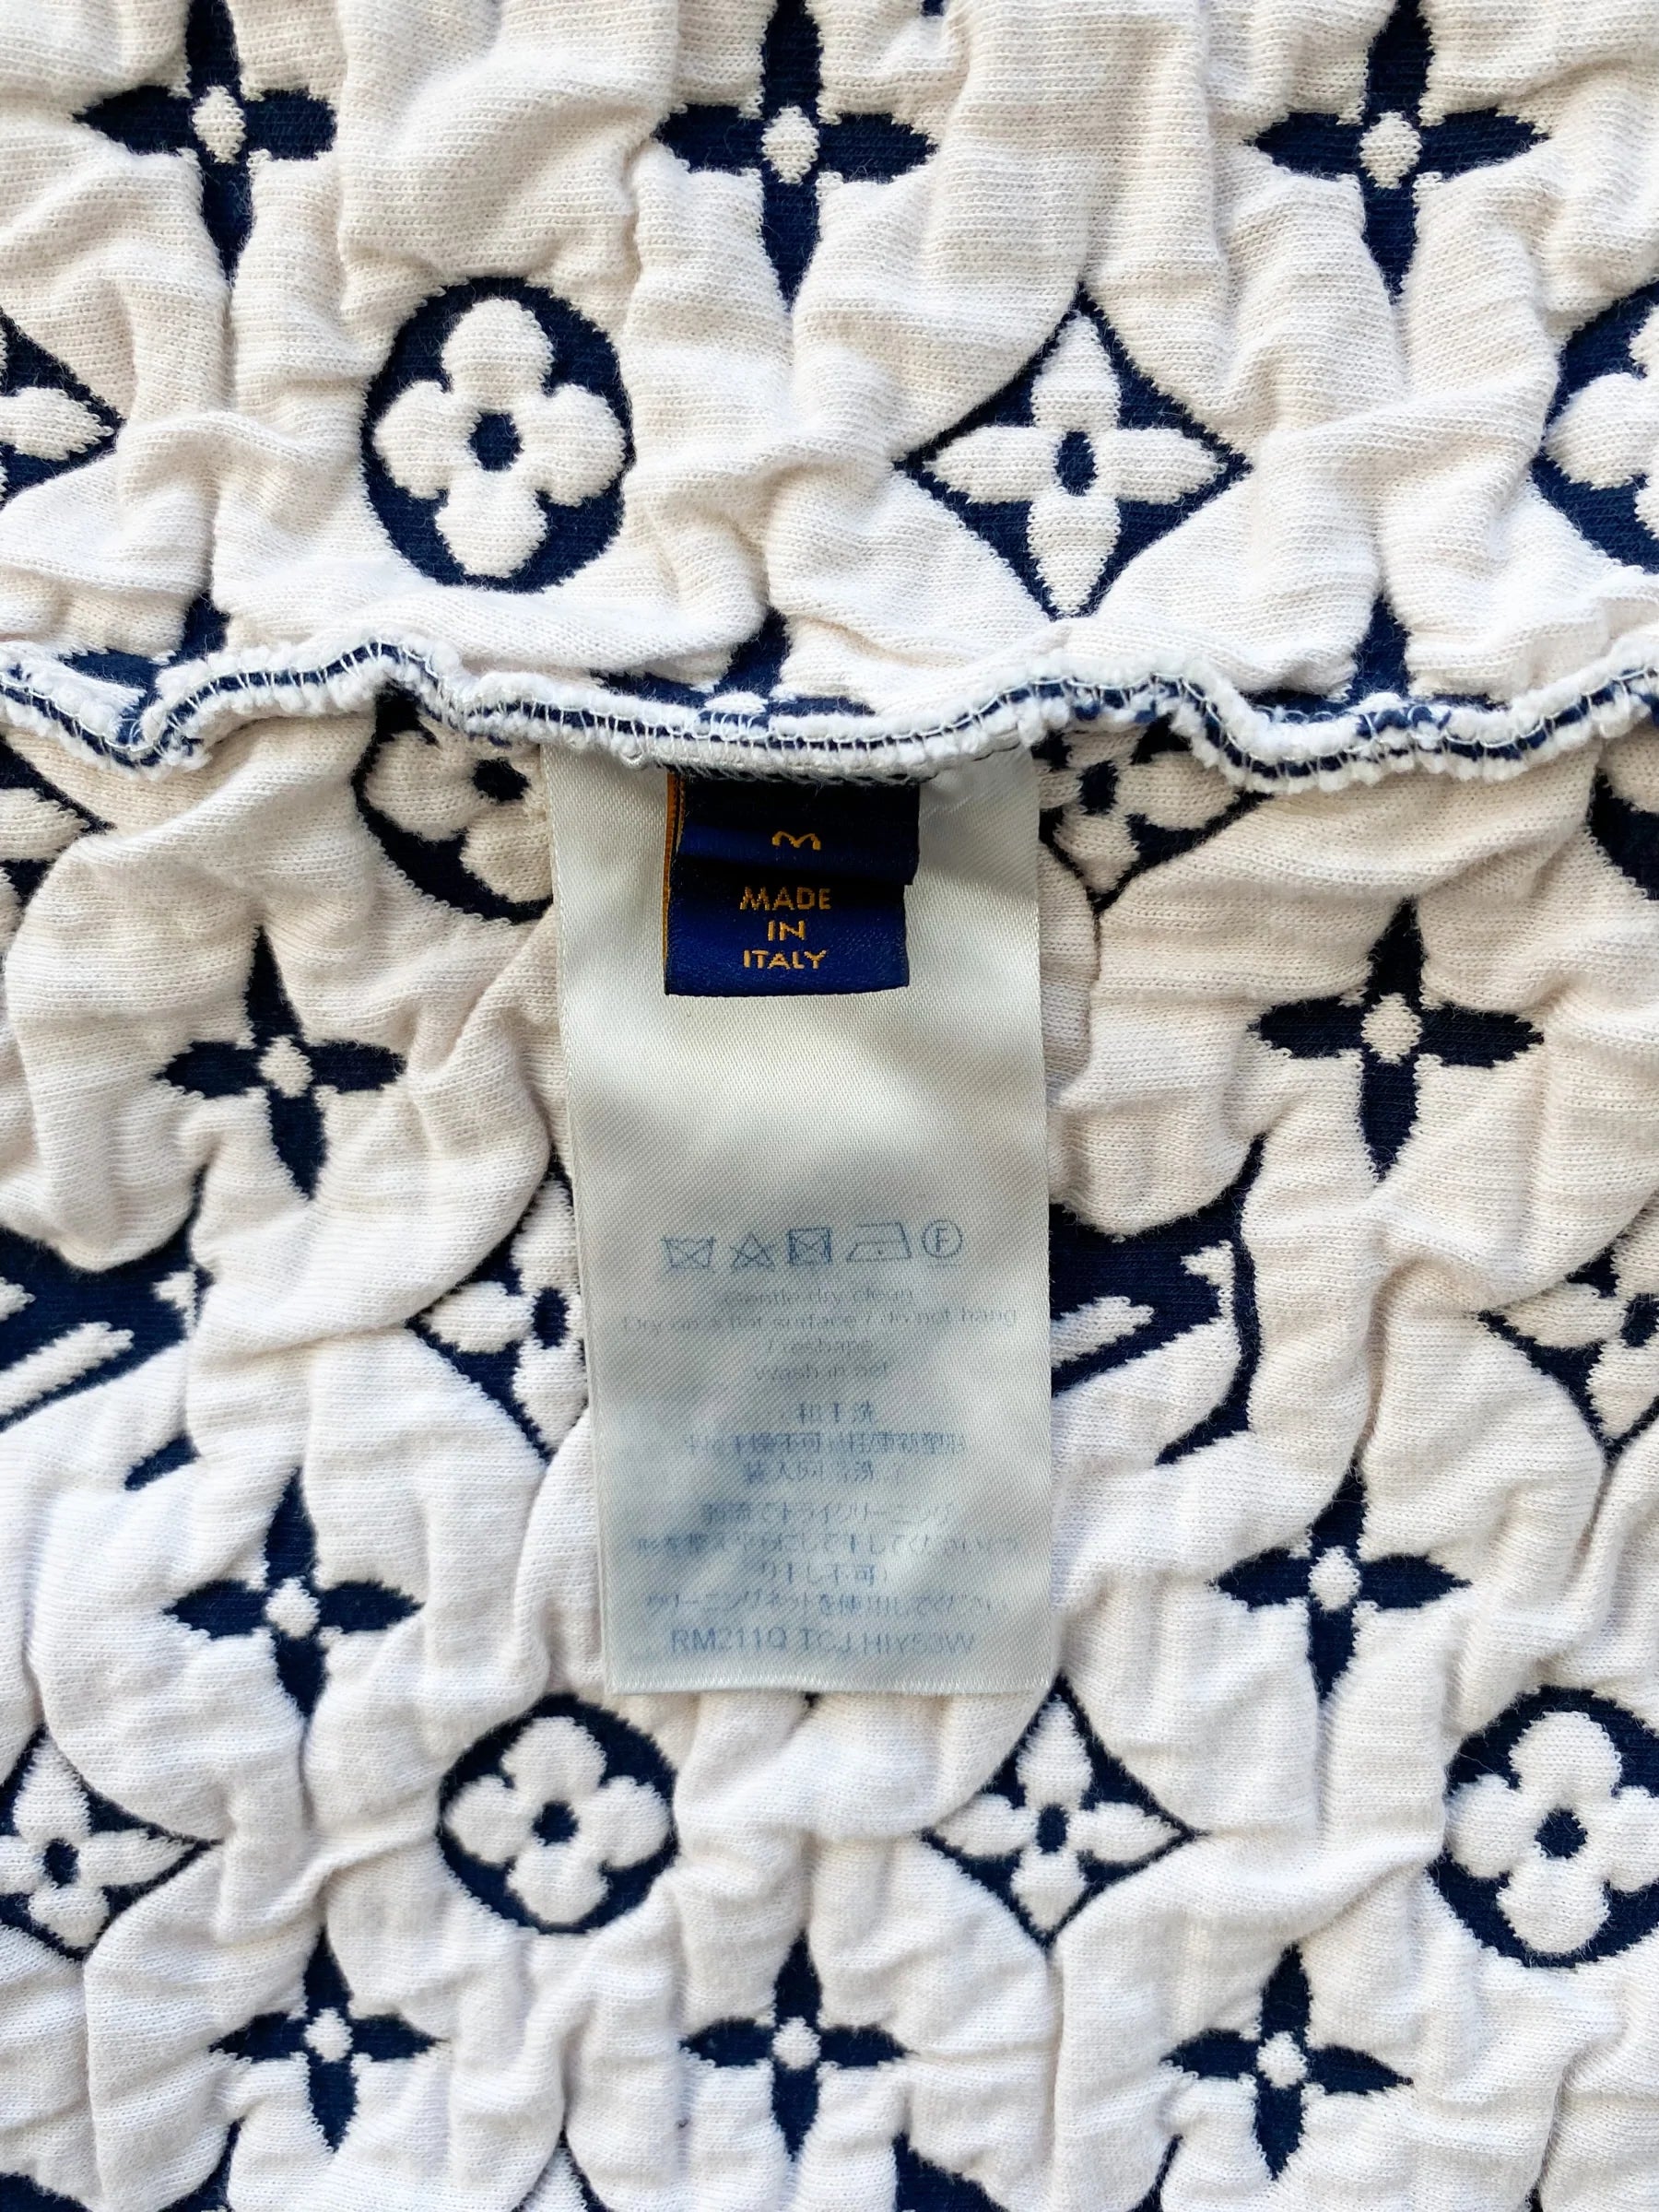 Louis Vuitton Navy & White Monogram Sweater – Savonches